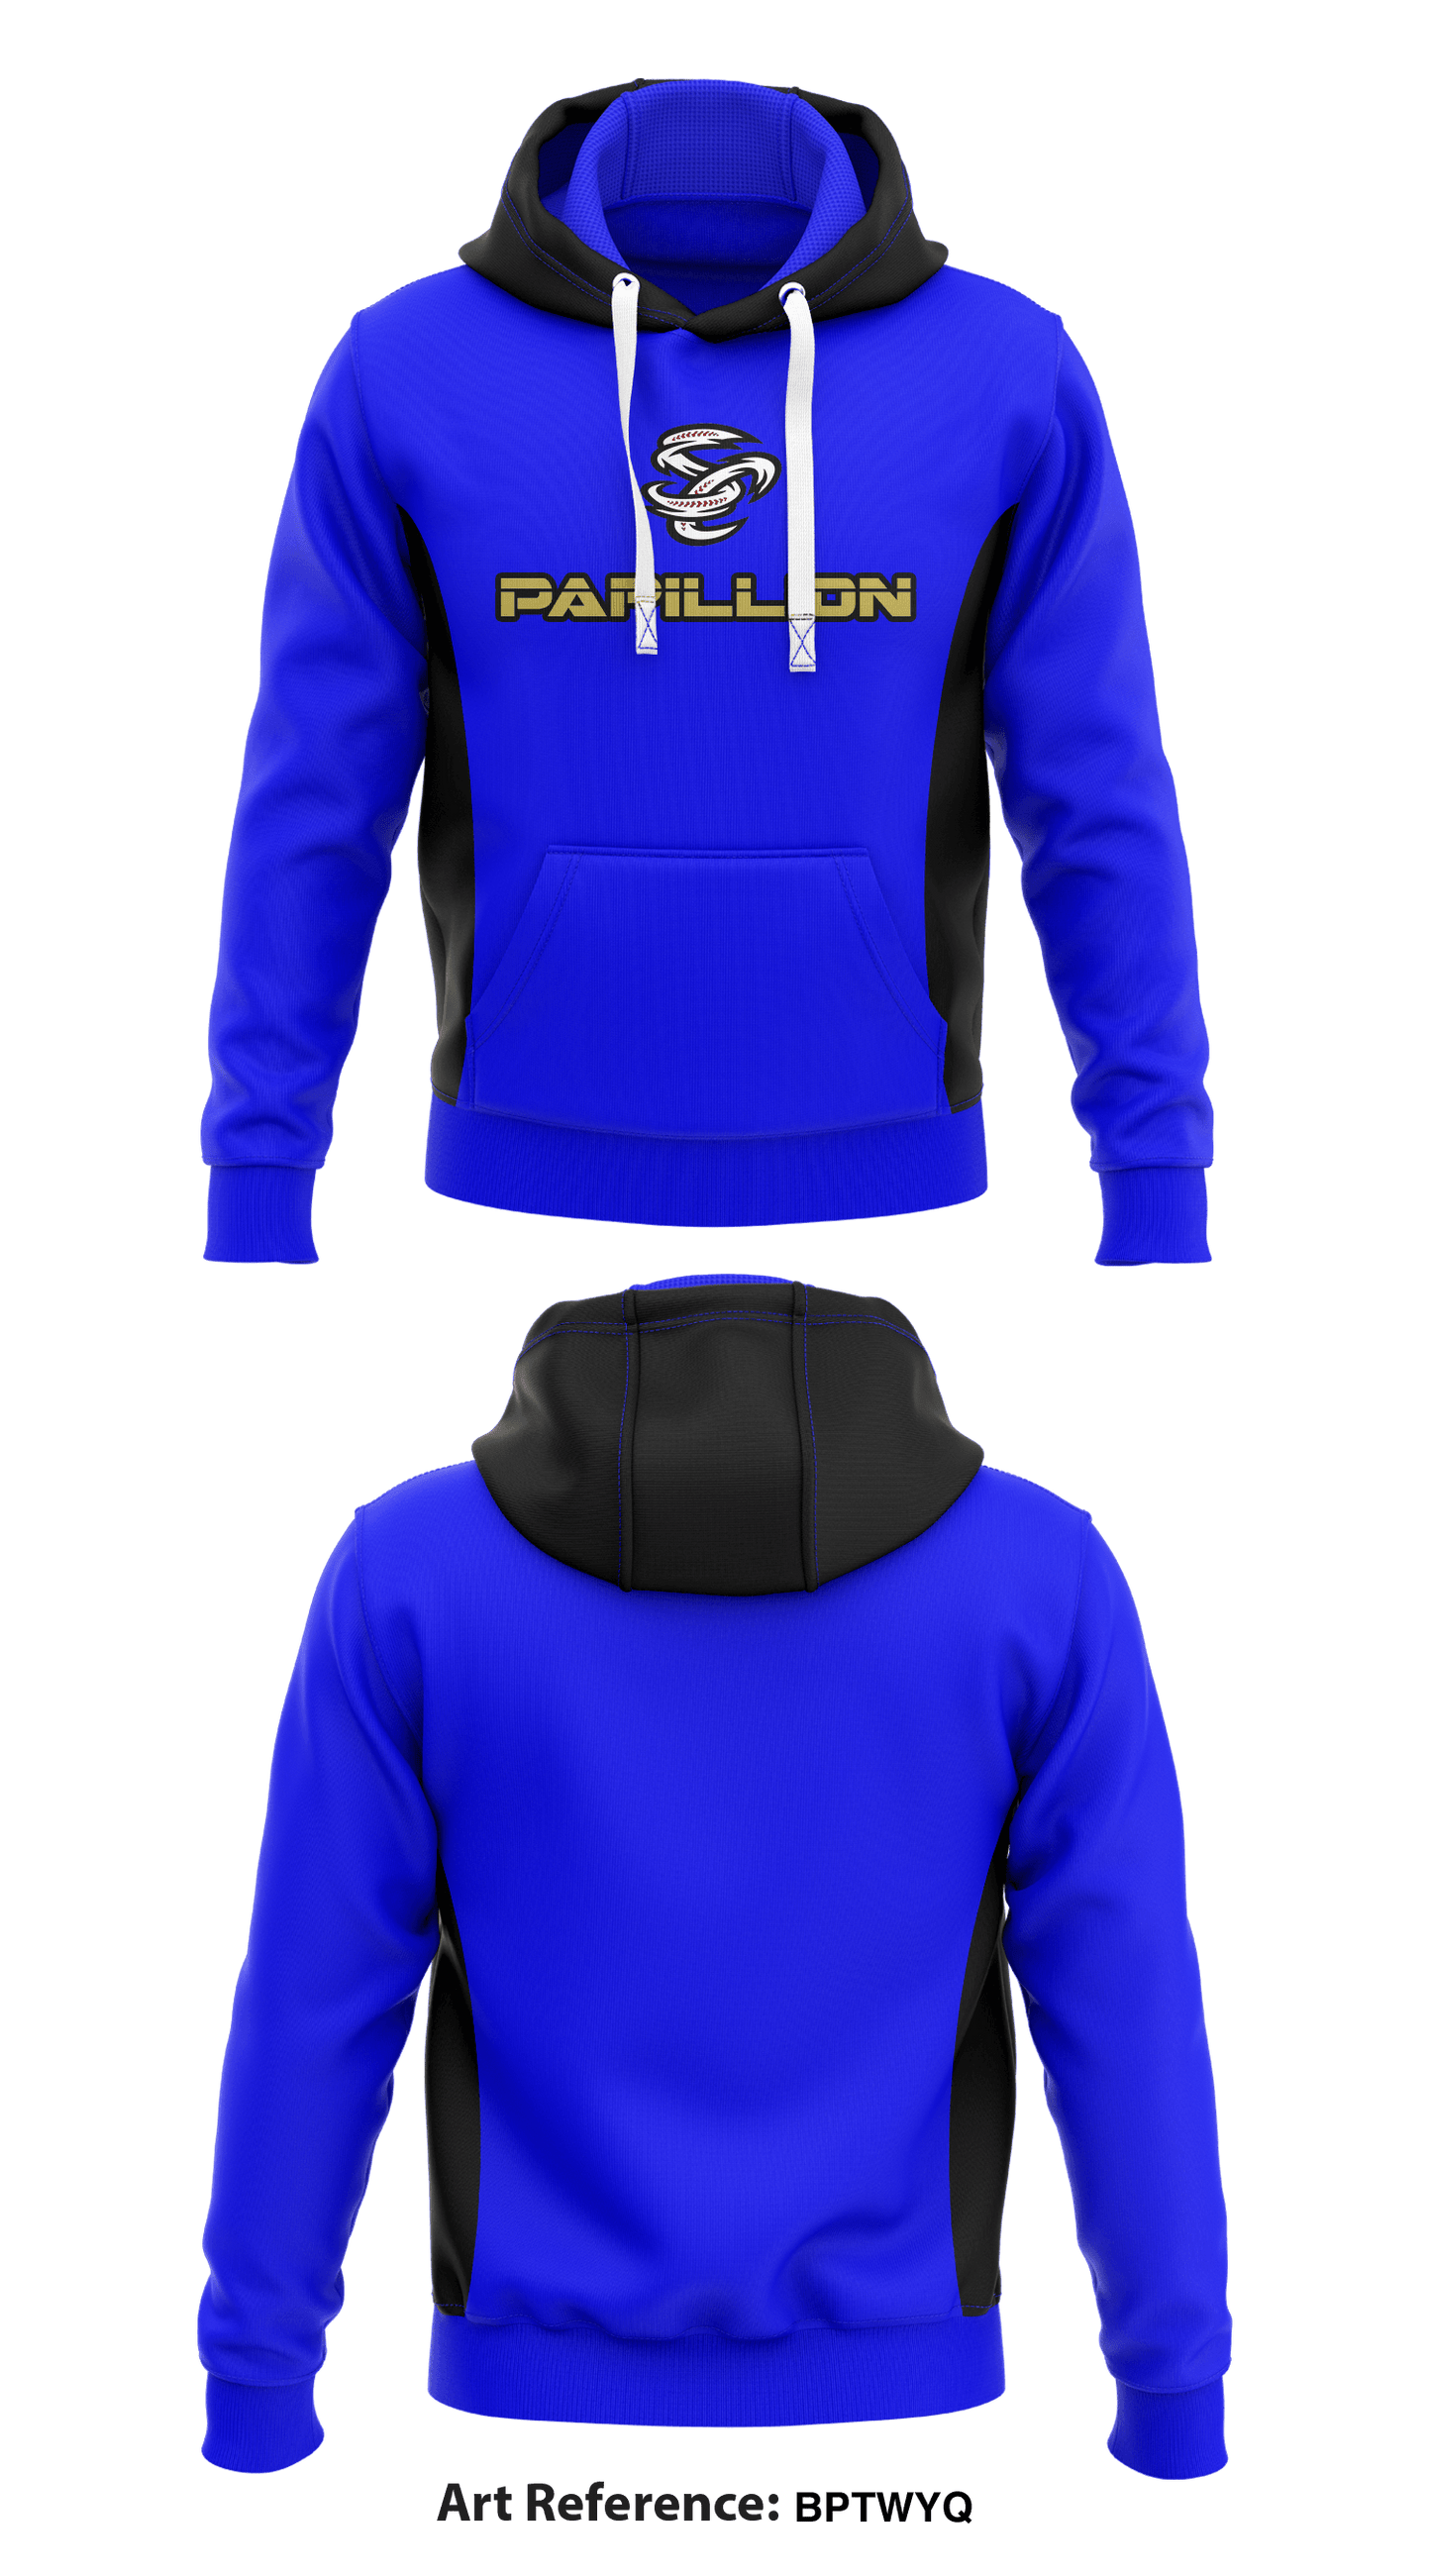 Papillion Store 1 Core Men's Hooded Performance Sweatshirt - BPTwyQ